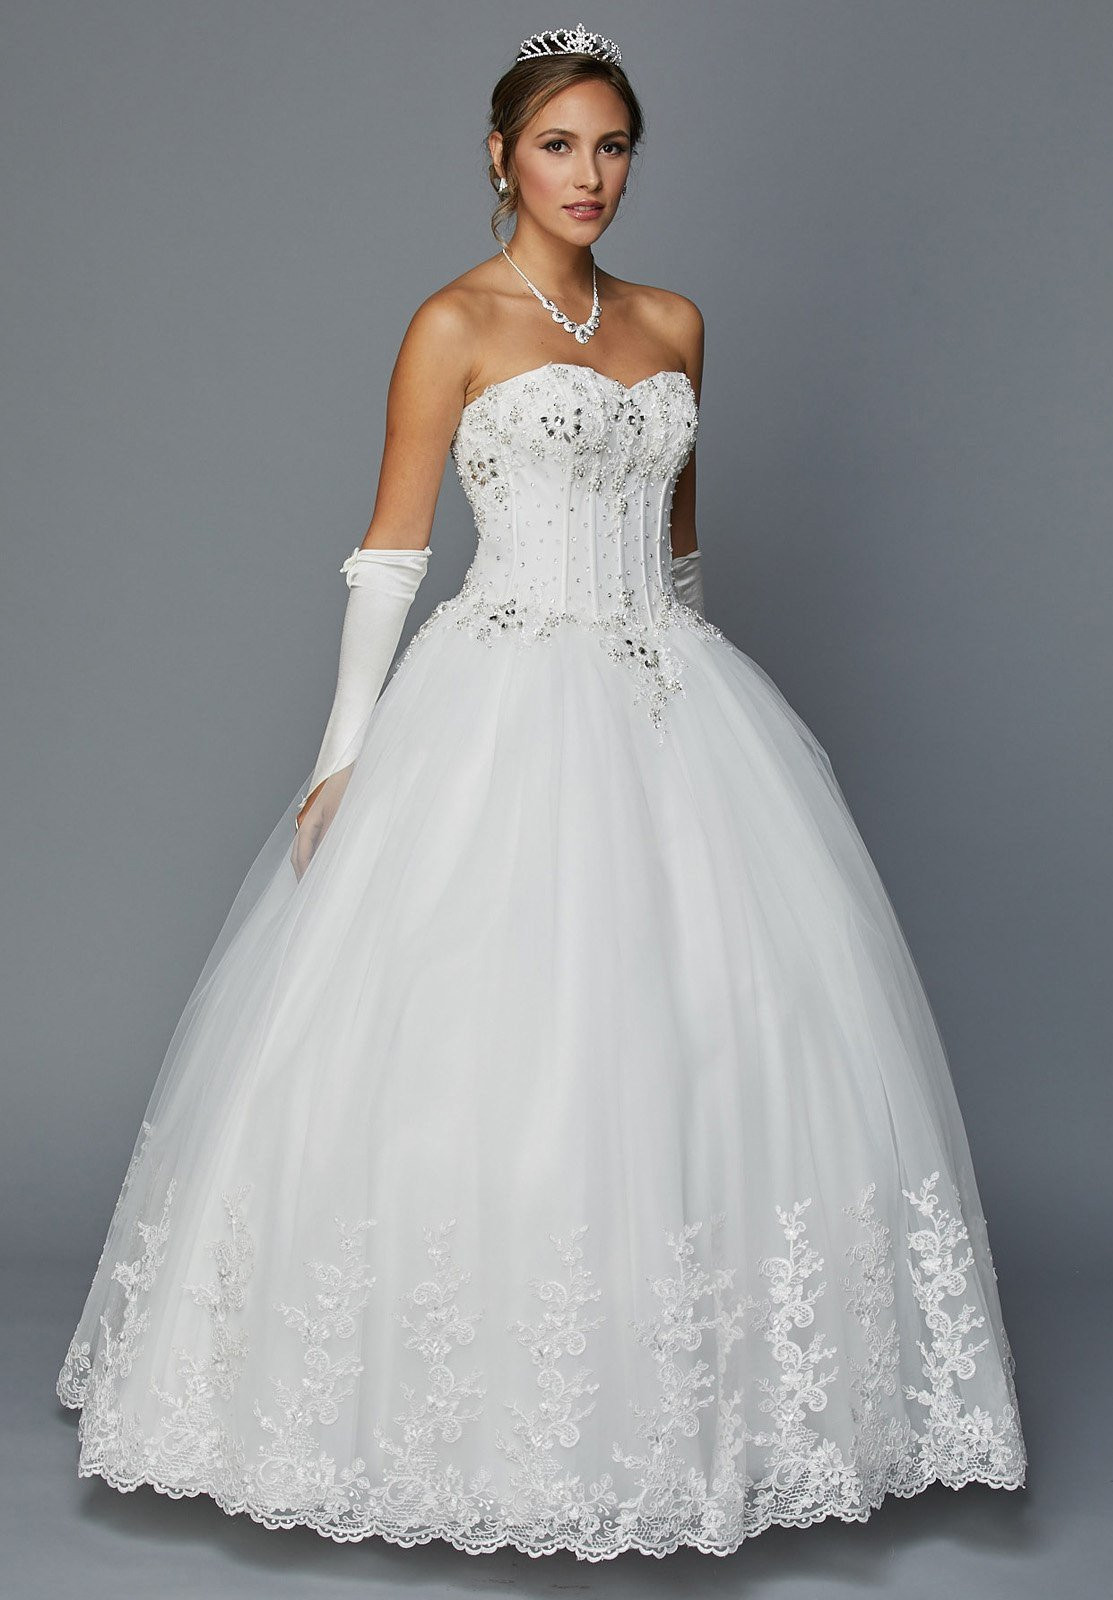 Strapless Wedding Gown
 Juliet 352 Jewel Bodice Strapless Ball Gown Wedding Dress